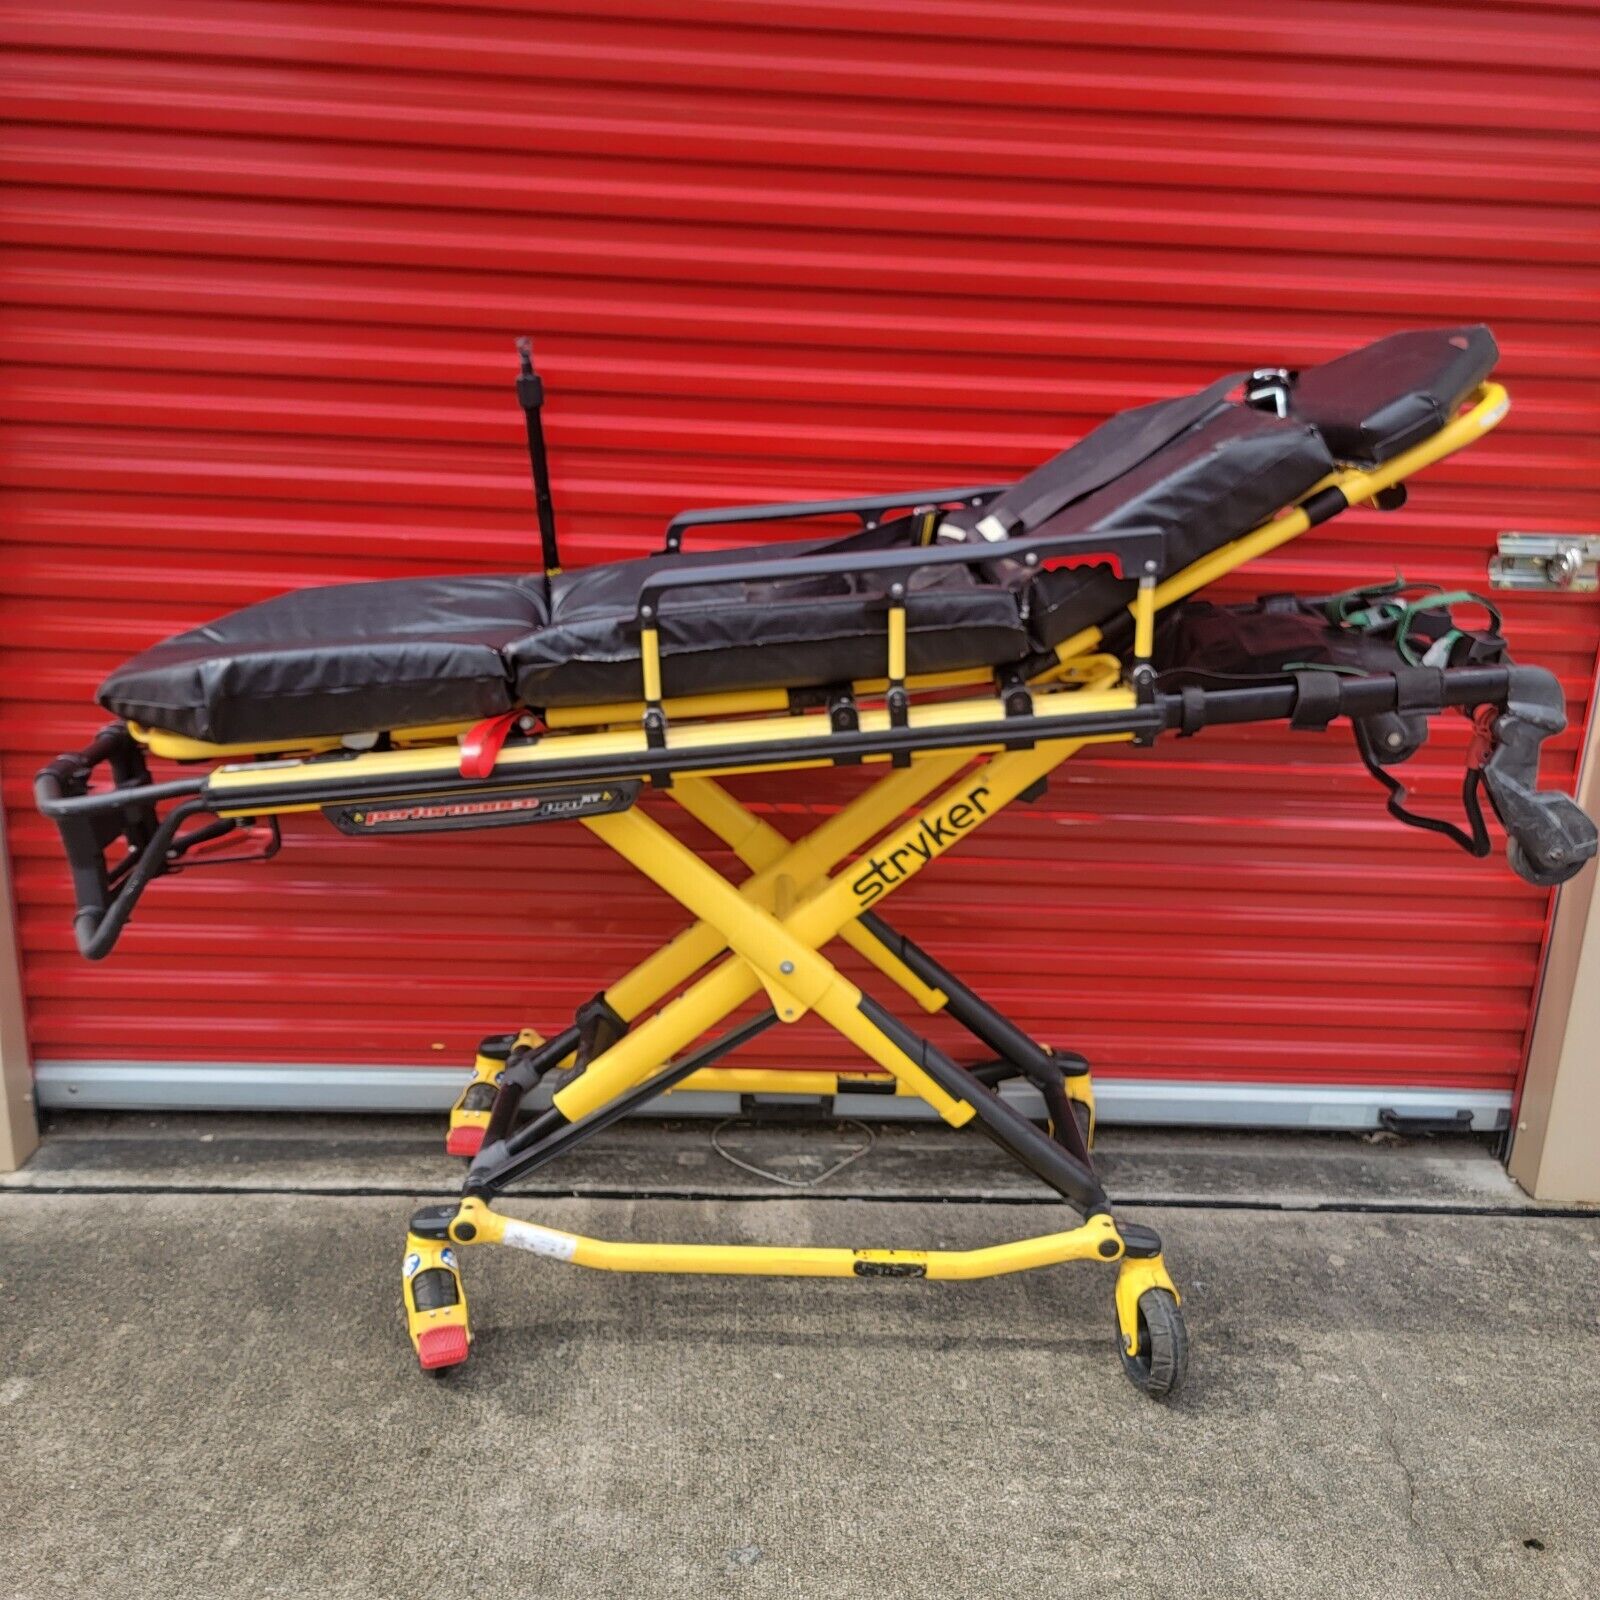 2013 Stryker Performance Pro Xt 6086 Ambulance Stretcher Mx Pro Power Xt #40920